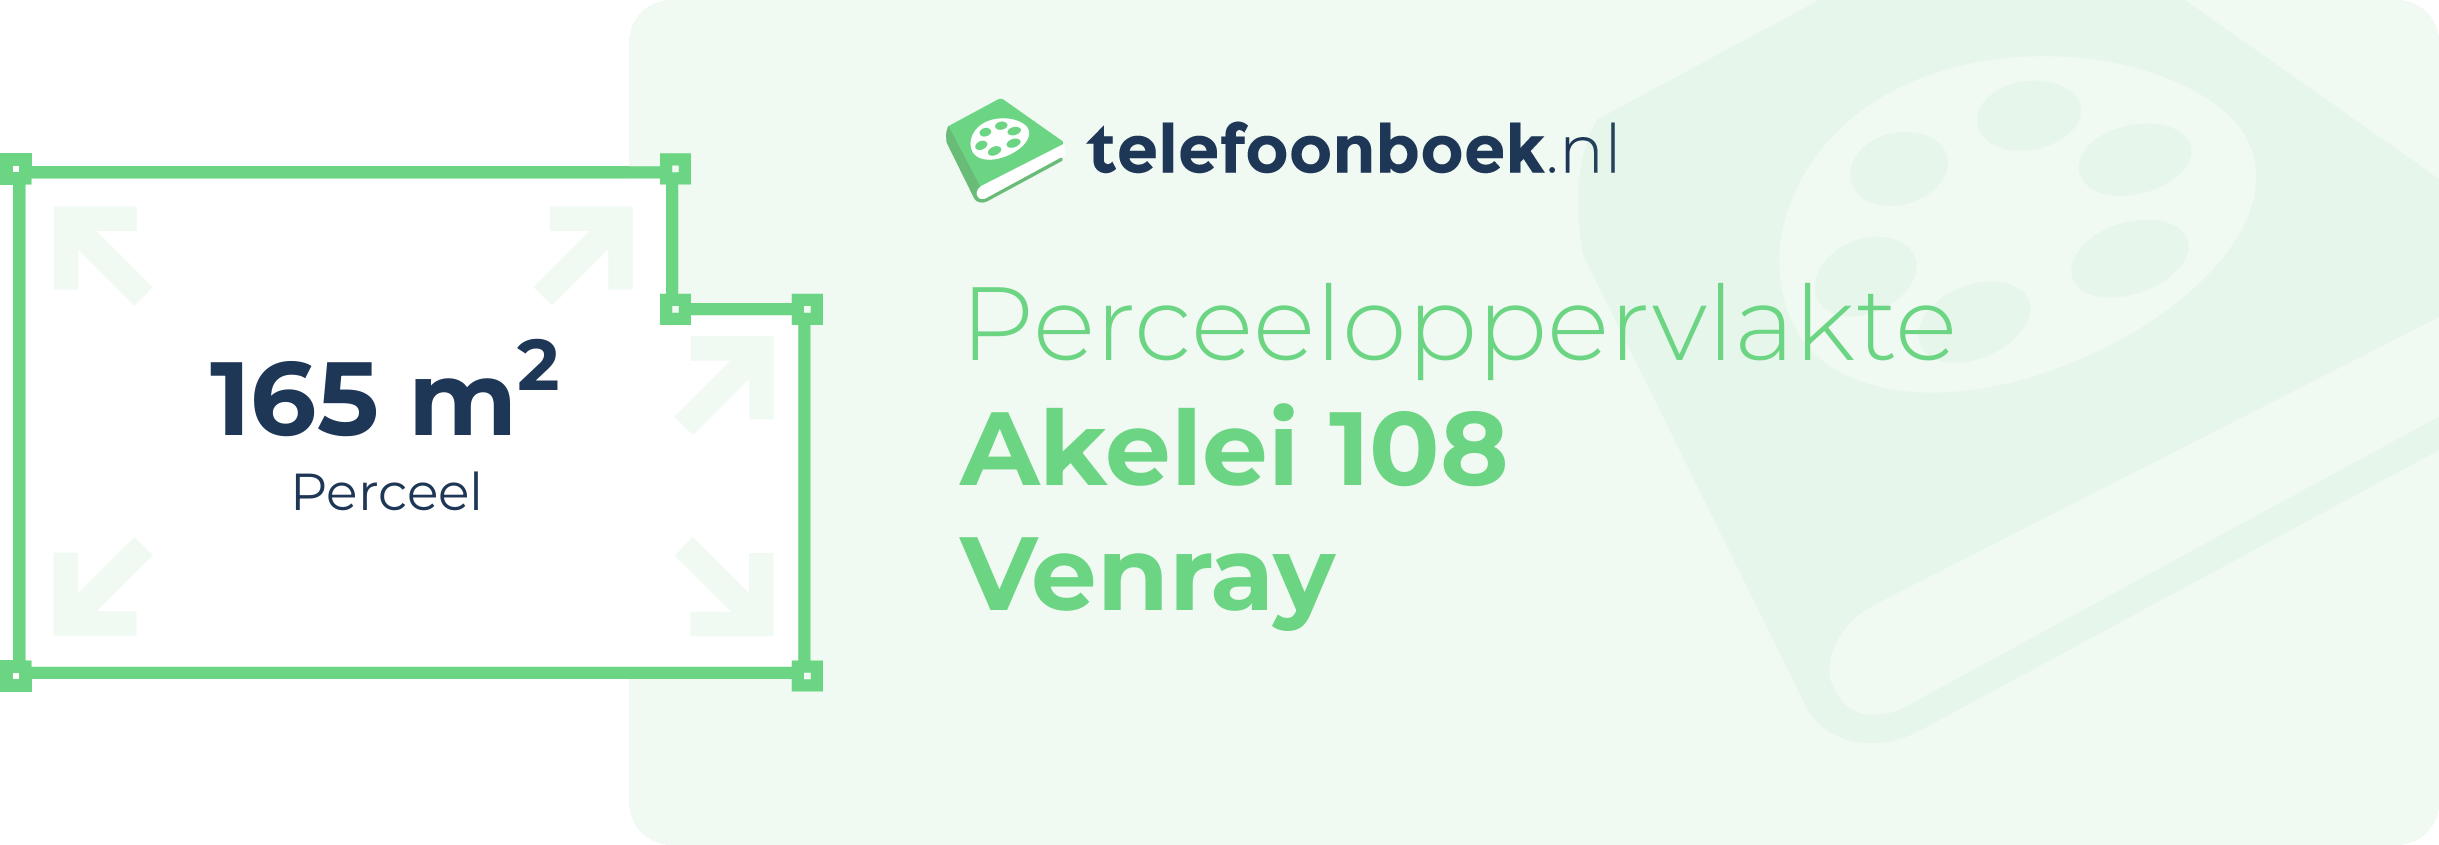 Perceeloppervlakte Akelei 108 Venray